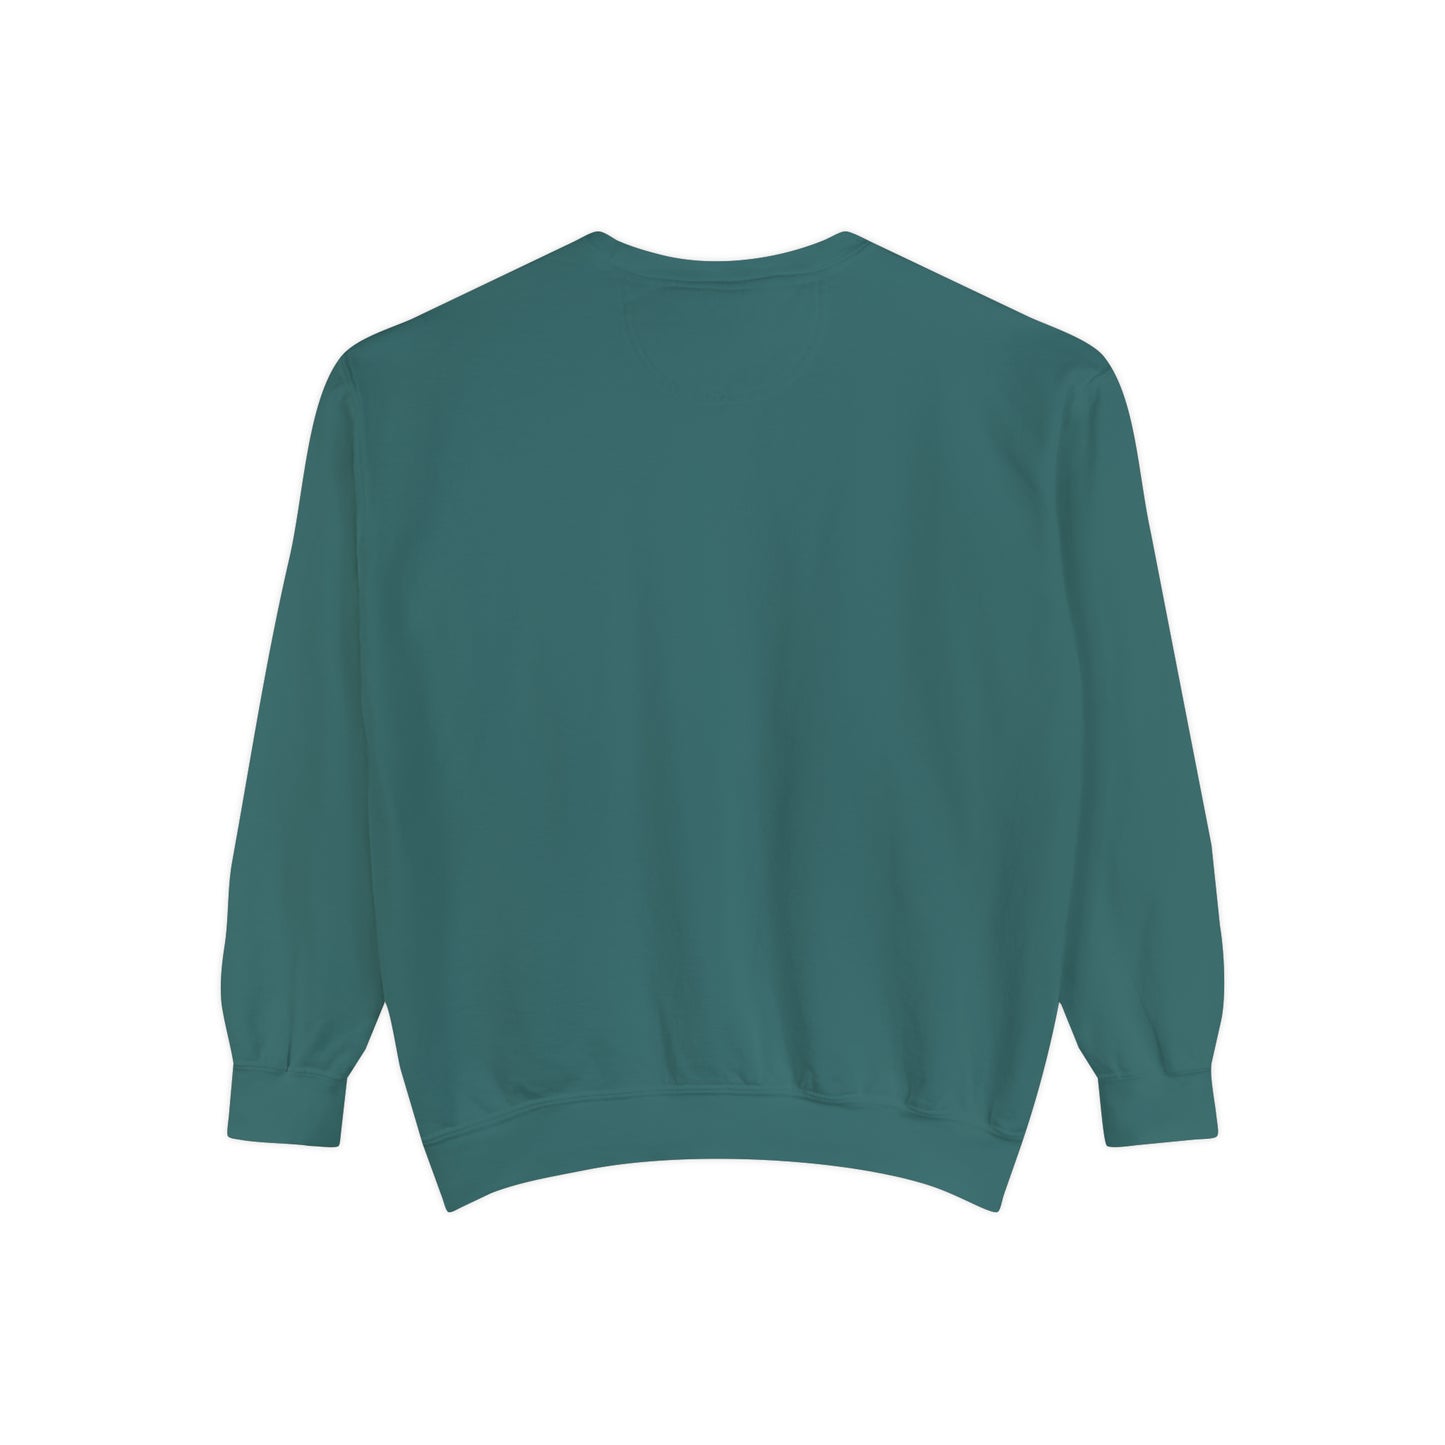 Coastal Cowgirl Comfort Colors Sweatshirt